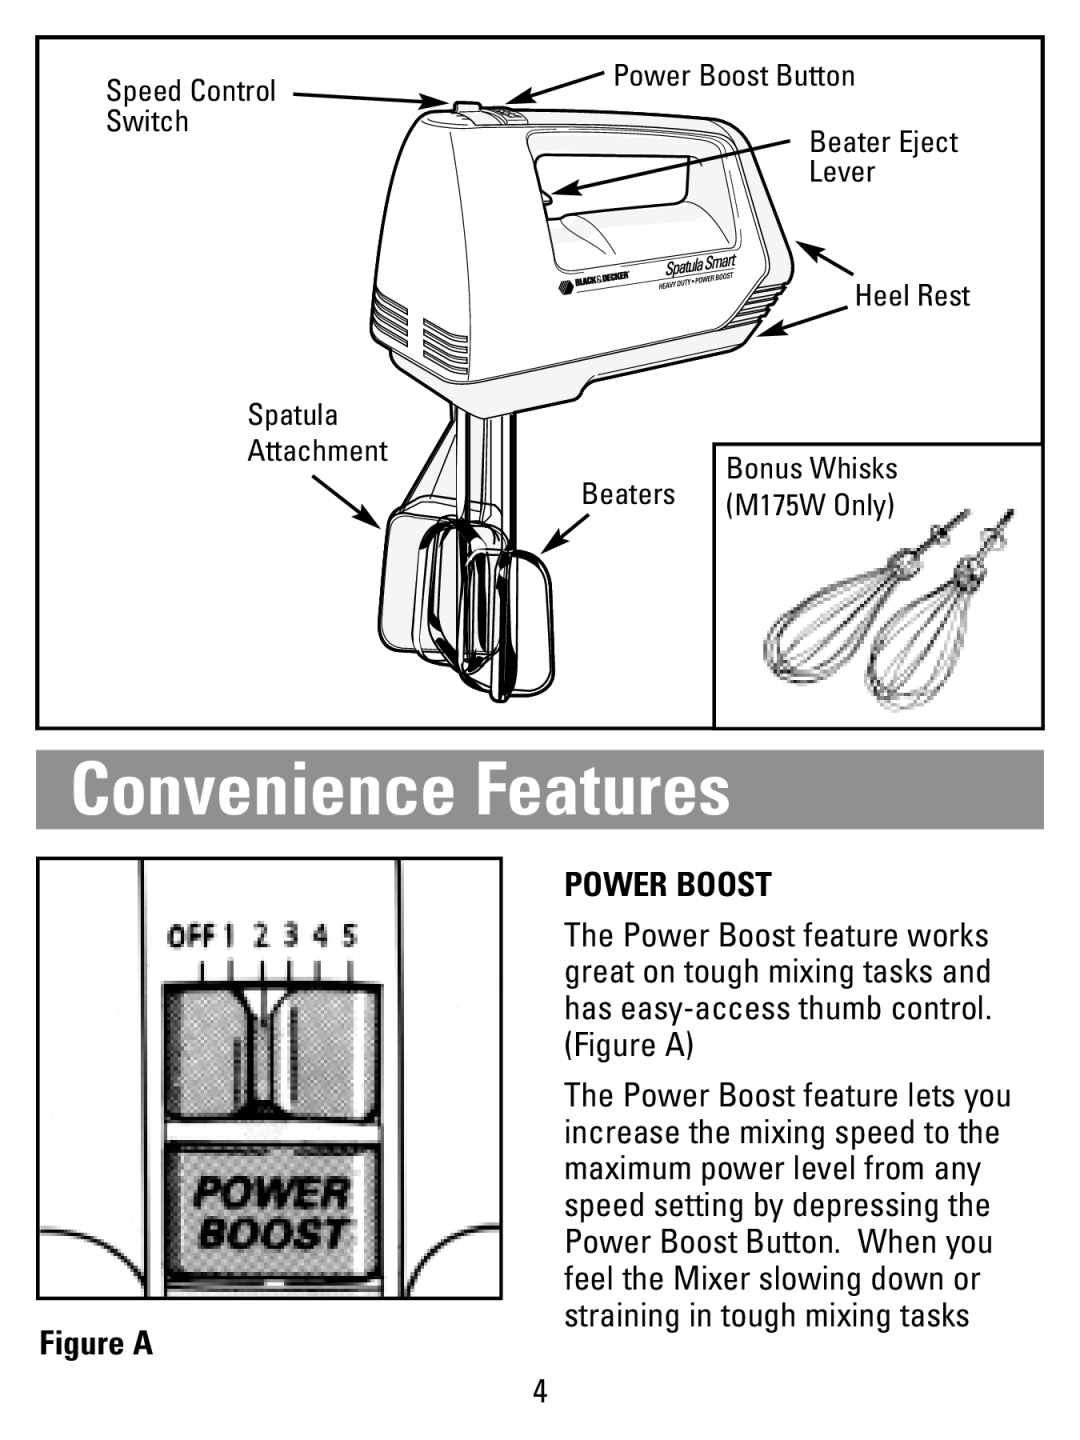 Black & Decker M175W manual Convenience Features, Power Boost, Figure A 